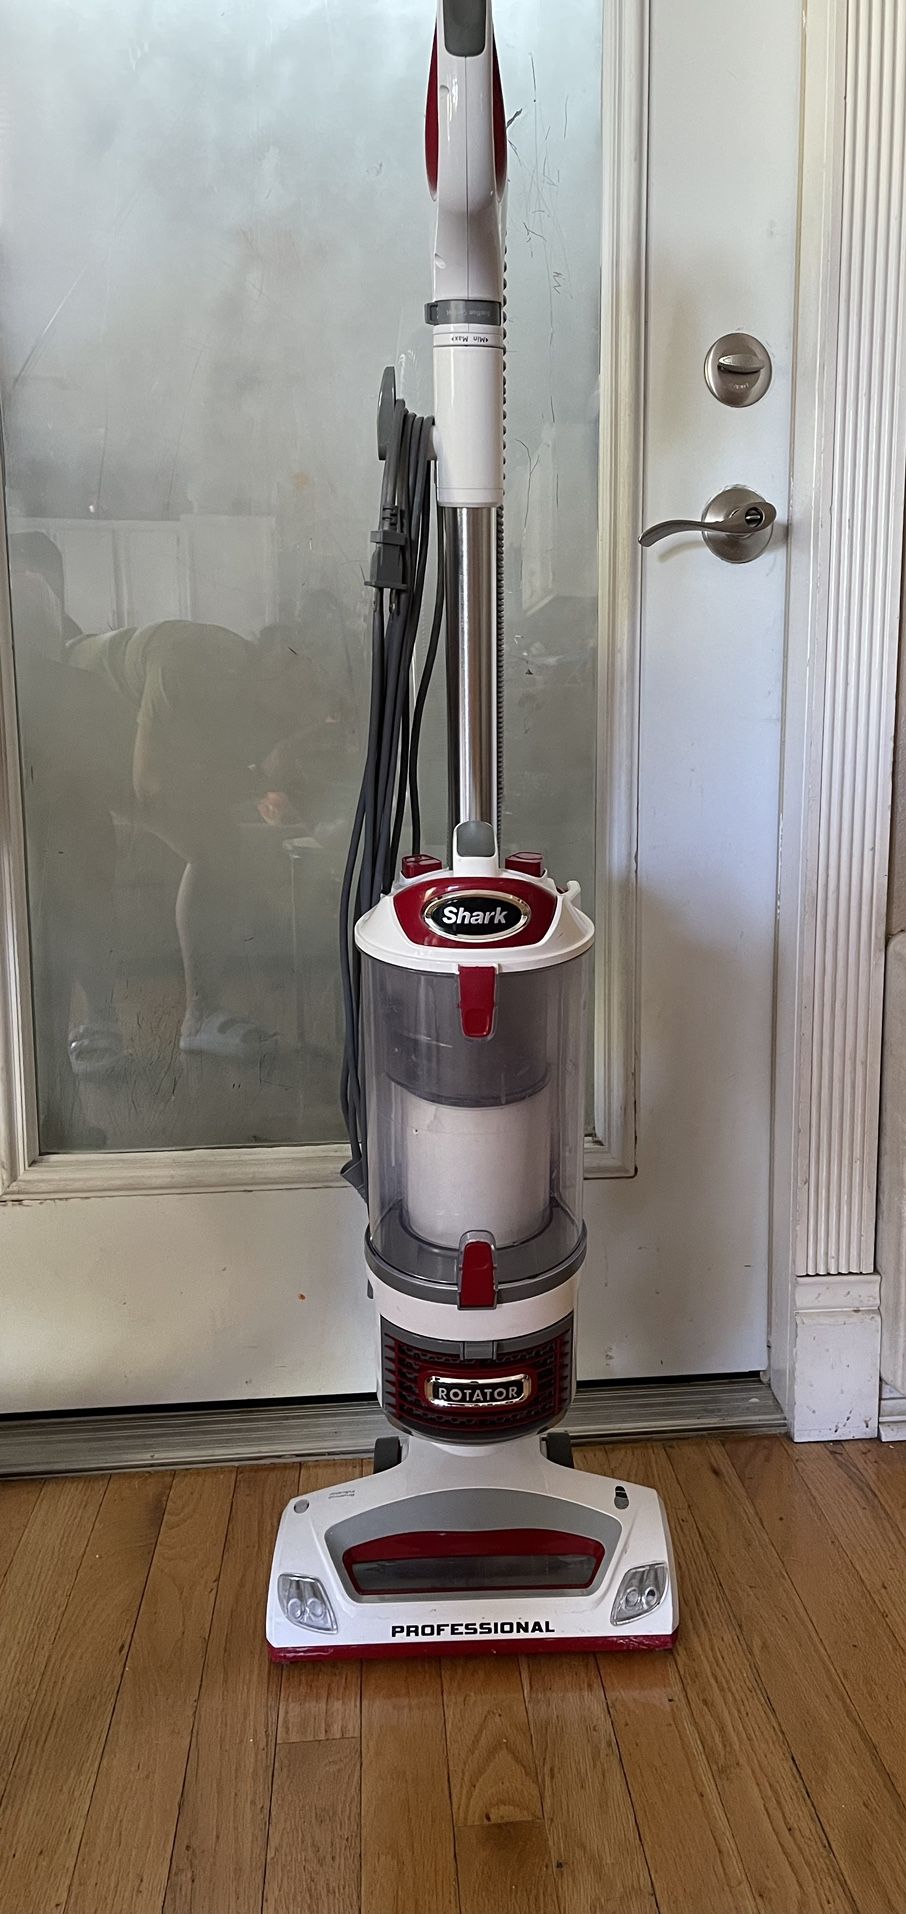 Shark NV501 Rotator Professional Lift-Away Upright Vacuum with HEPA Filter, Swivel Steering, LED